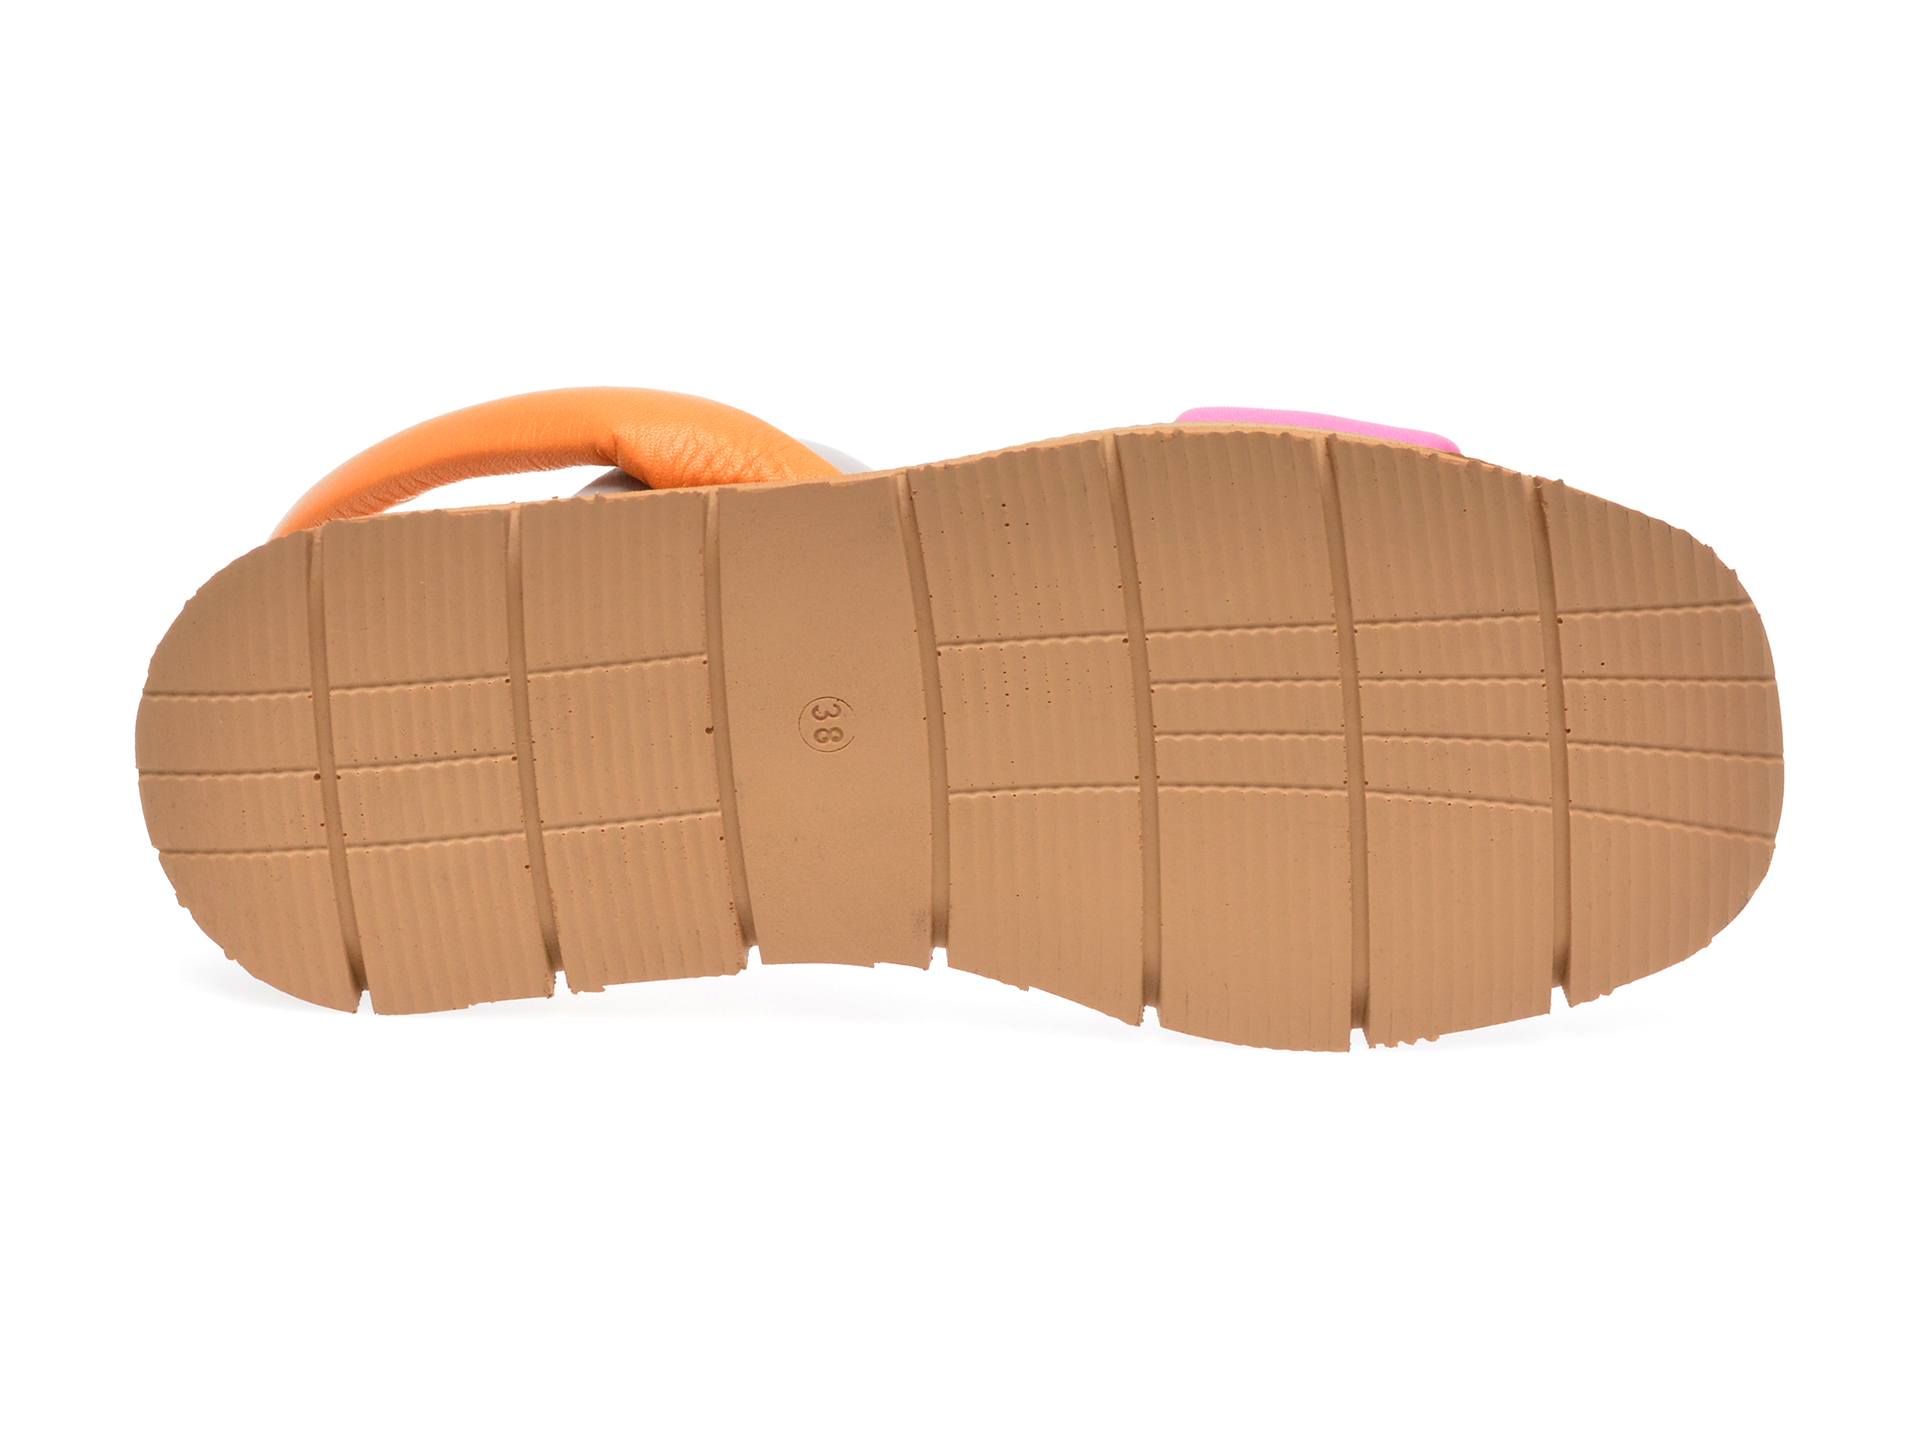 Sandale casual GRYXX roz, 321035, din piele naturala